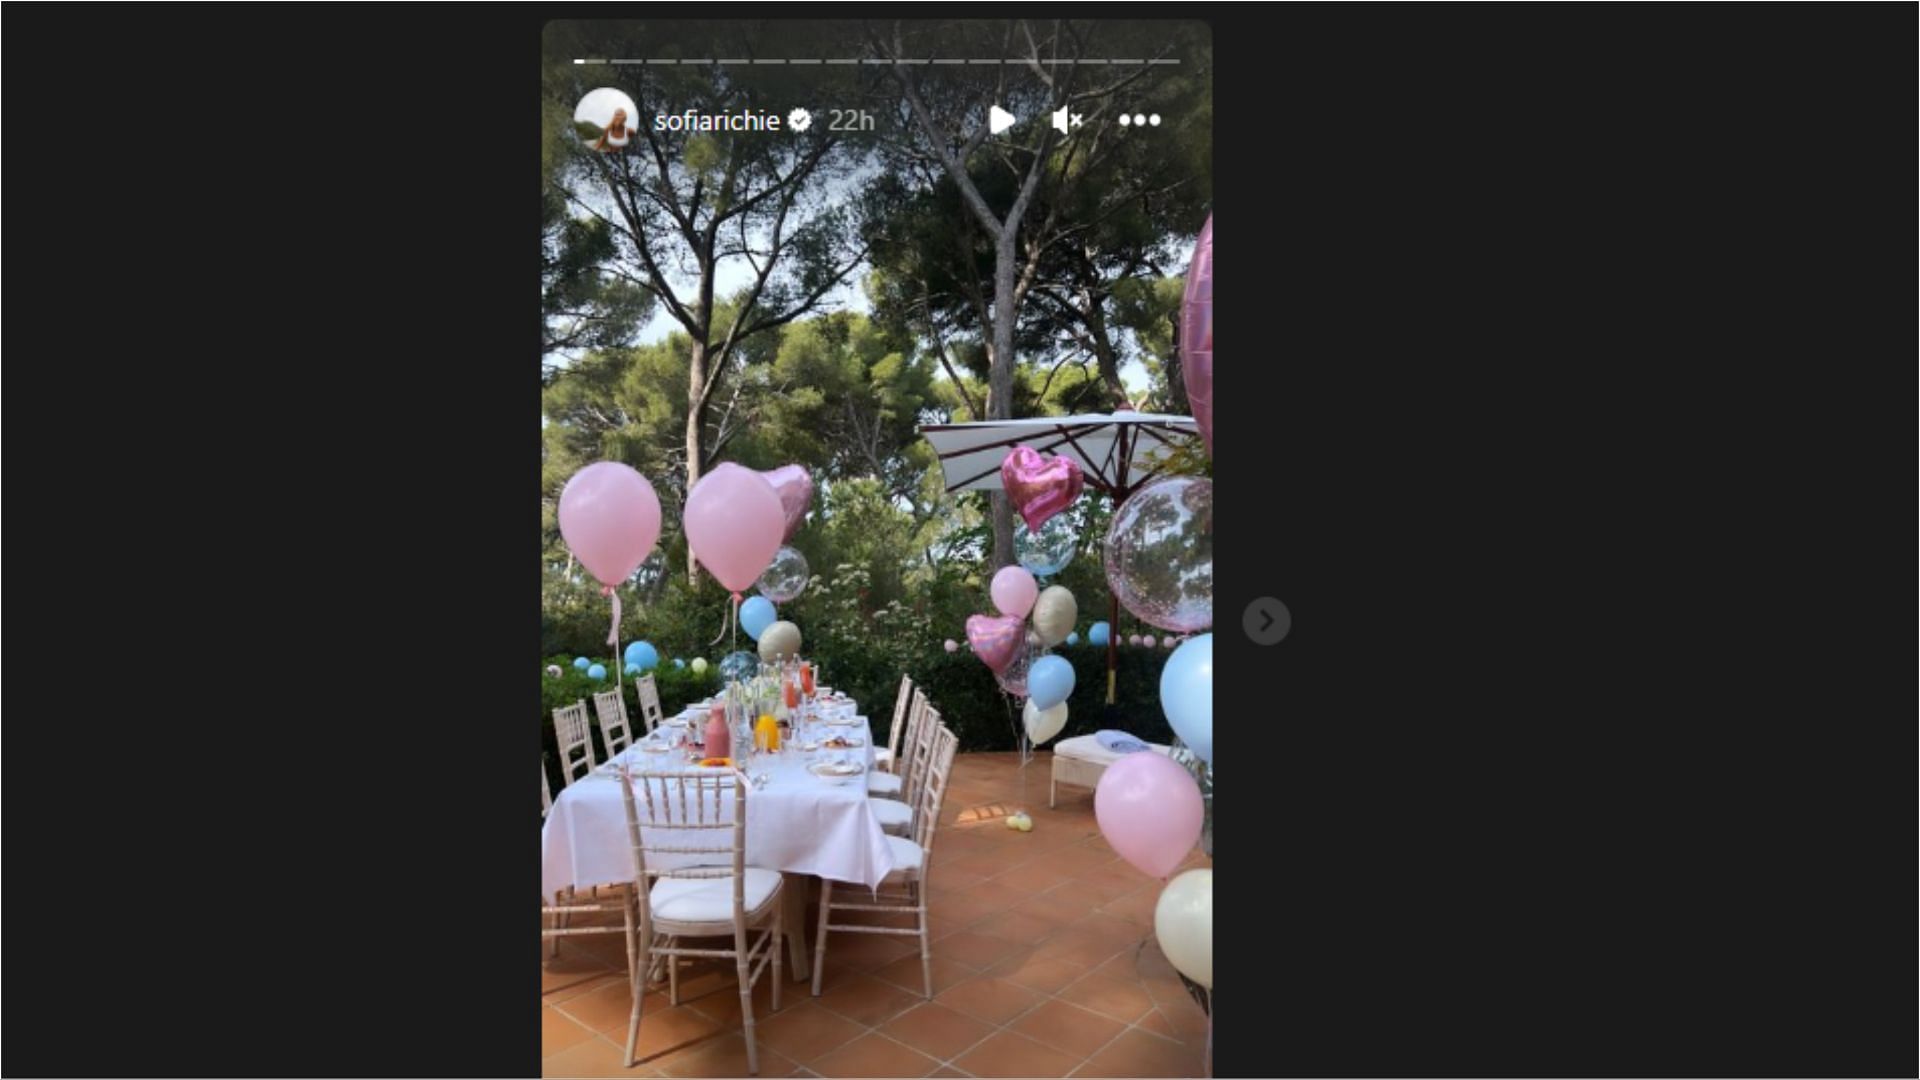 Sofia Richie shared the glimpses of her wedding celebrations (Image via sofiarichie/Instagram)